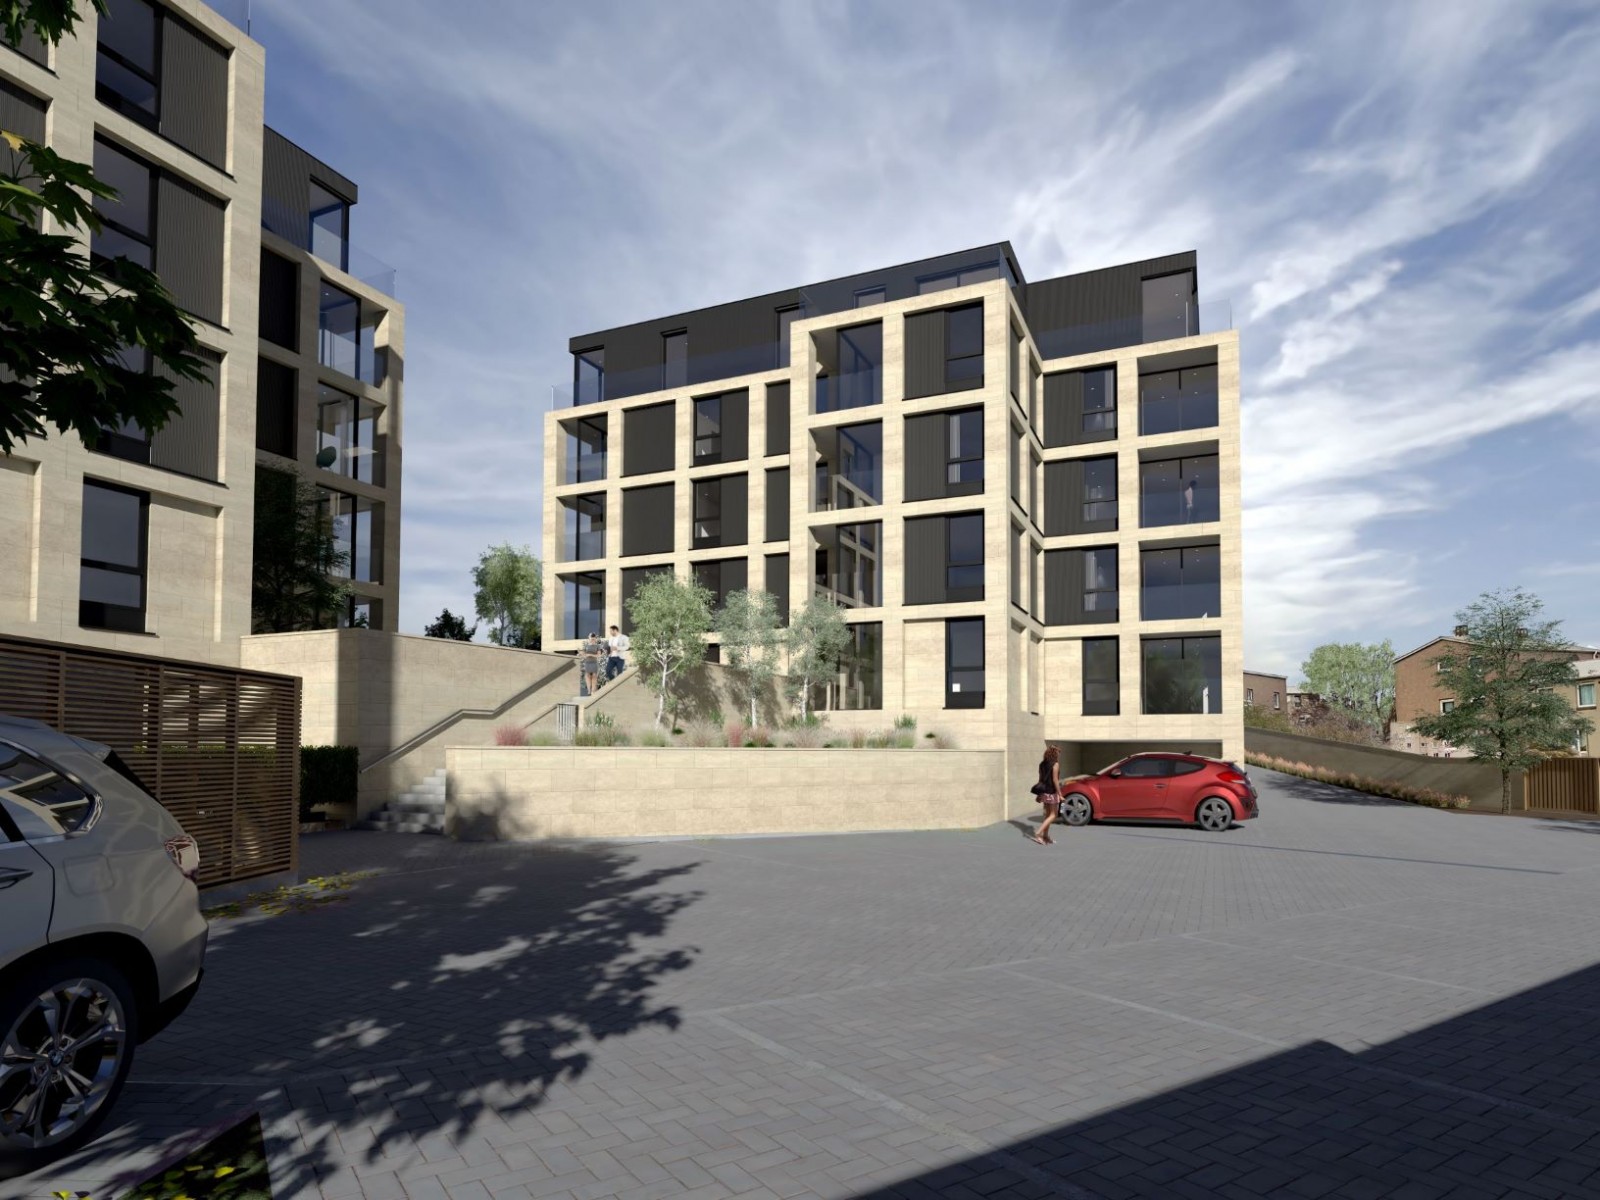 Apartment blocks planned for Edinburgh's Northfield district